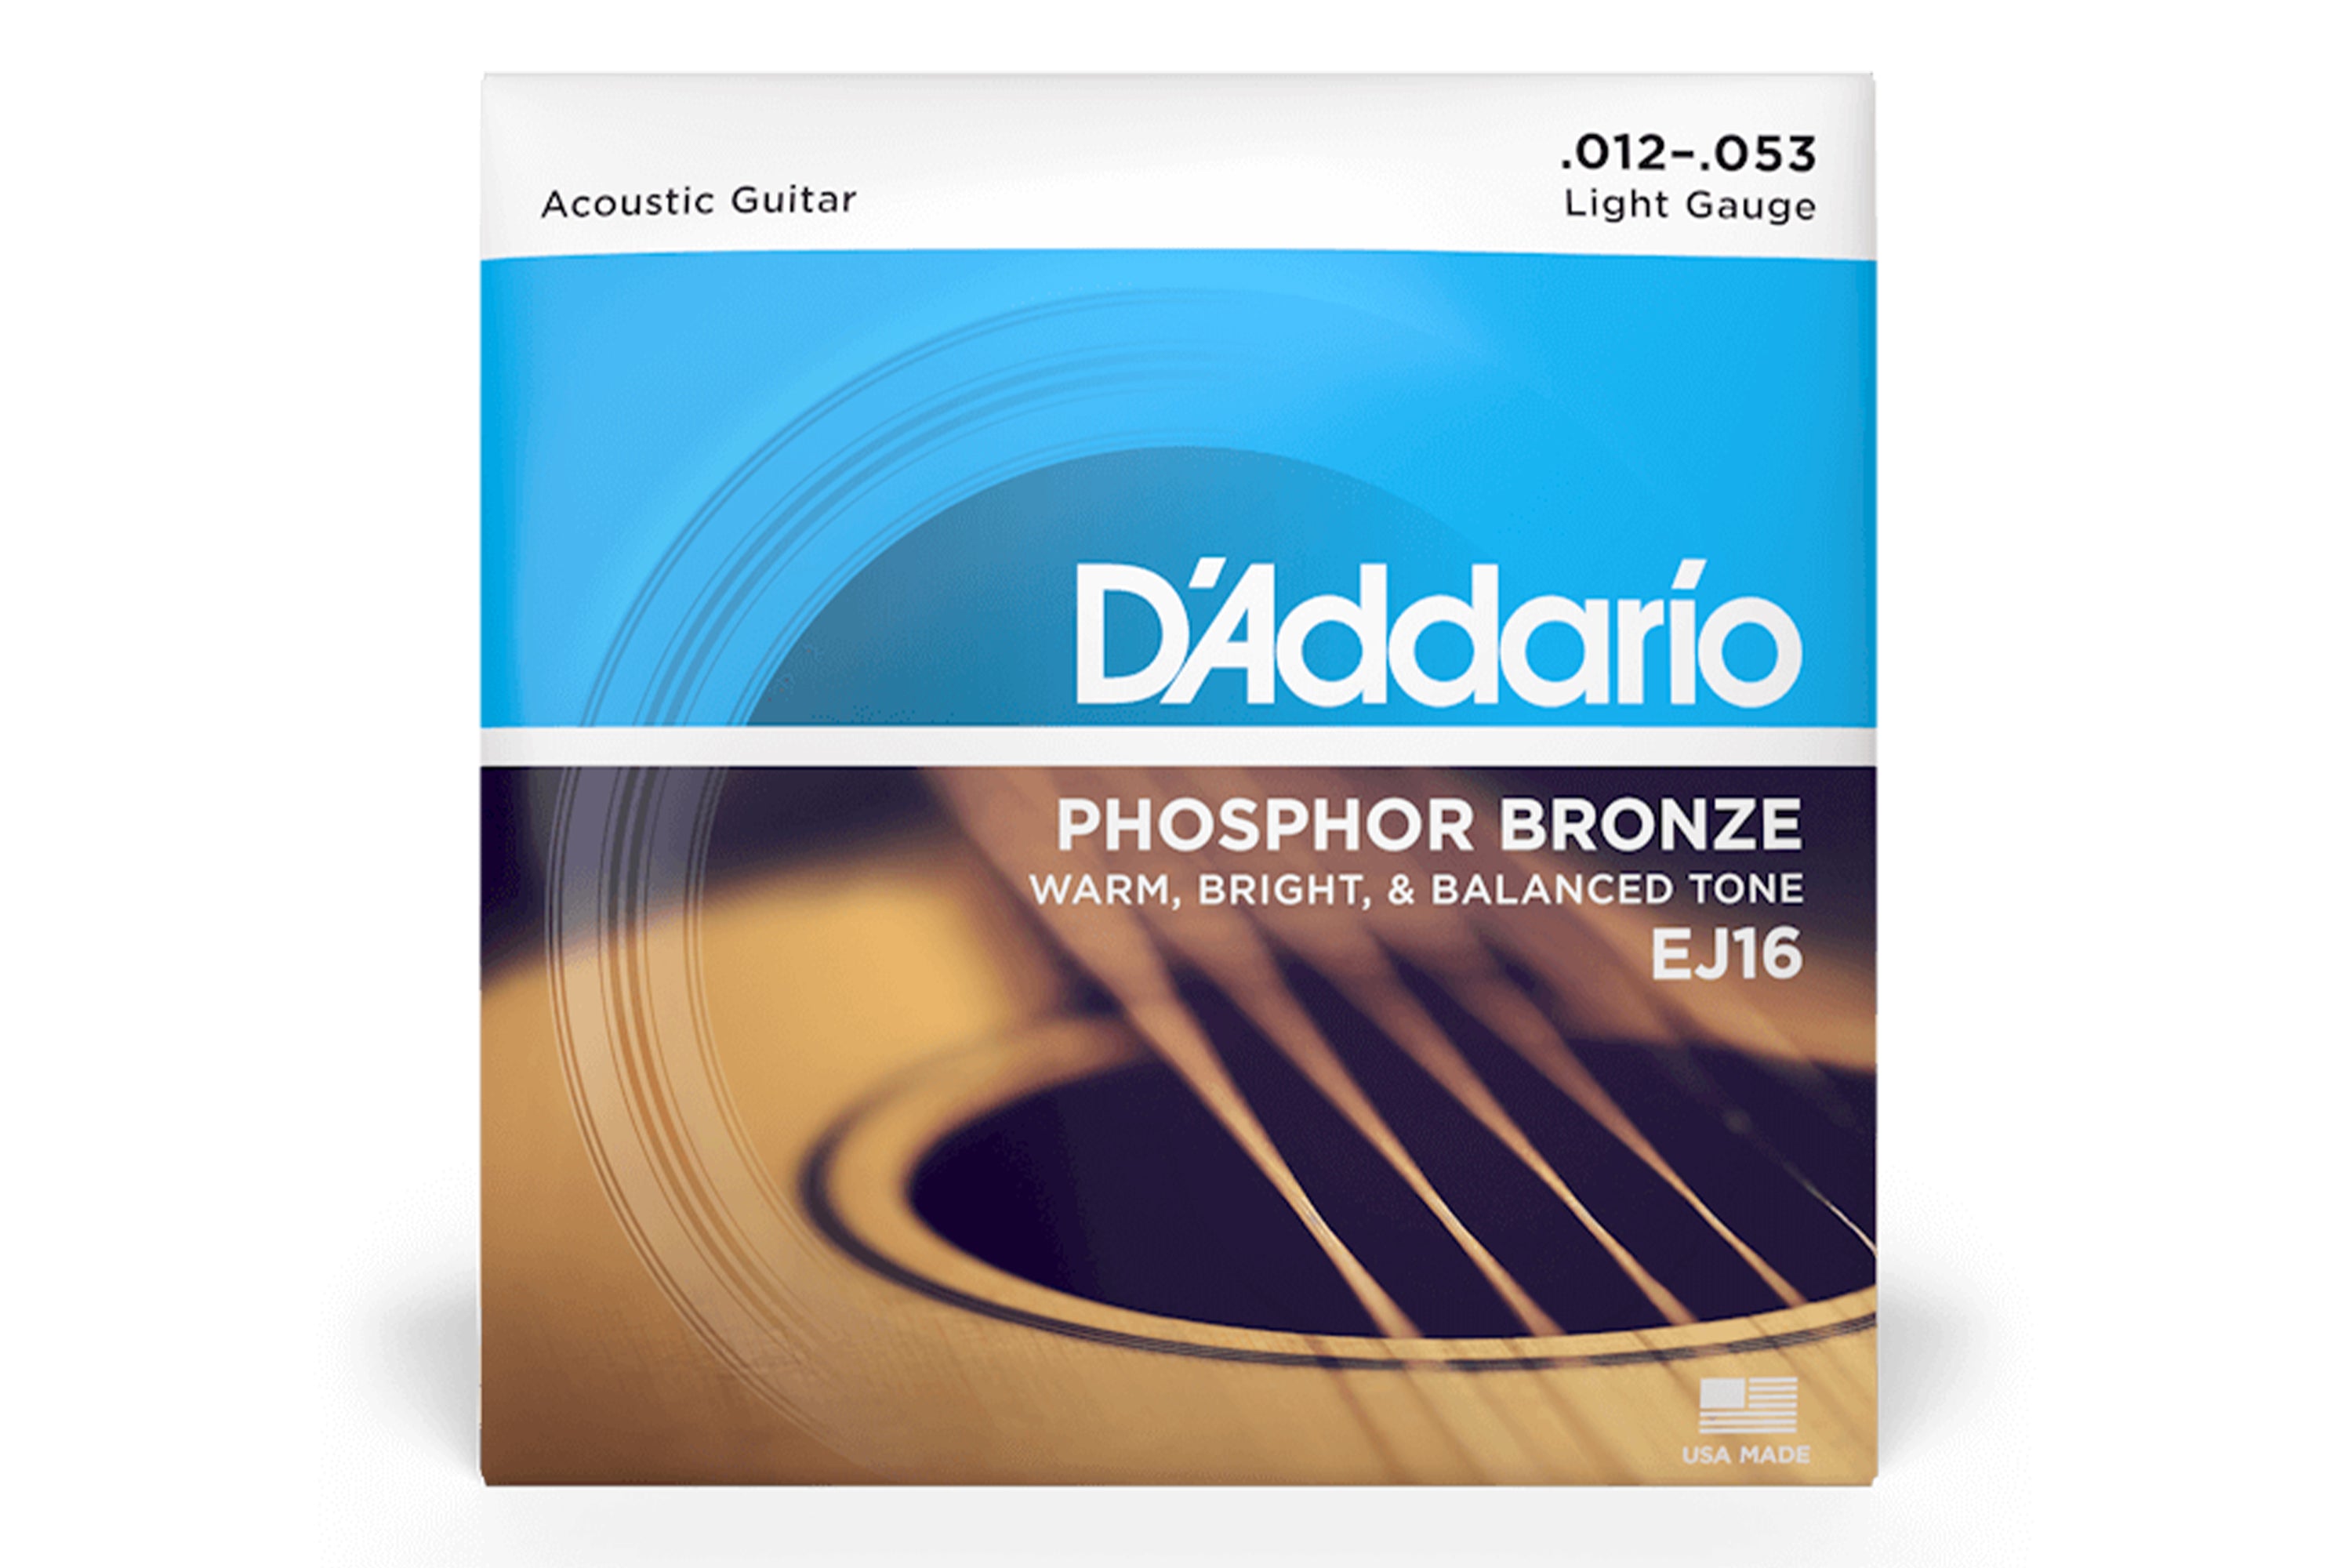 D'addario Phosphor Bronze Acoustic Guitar Strings